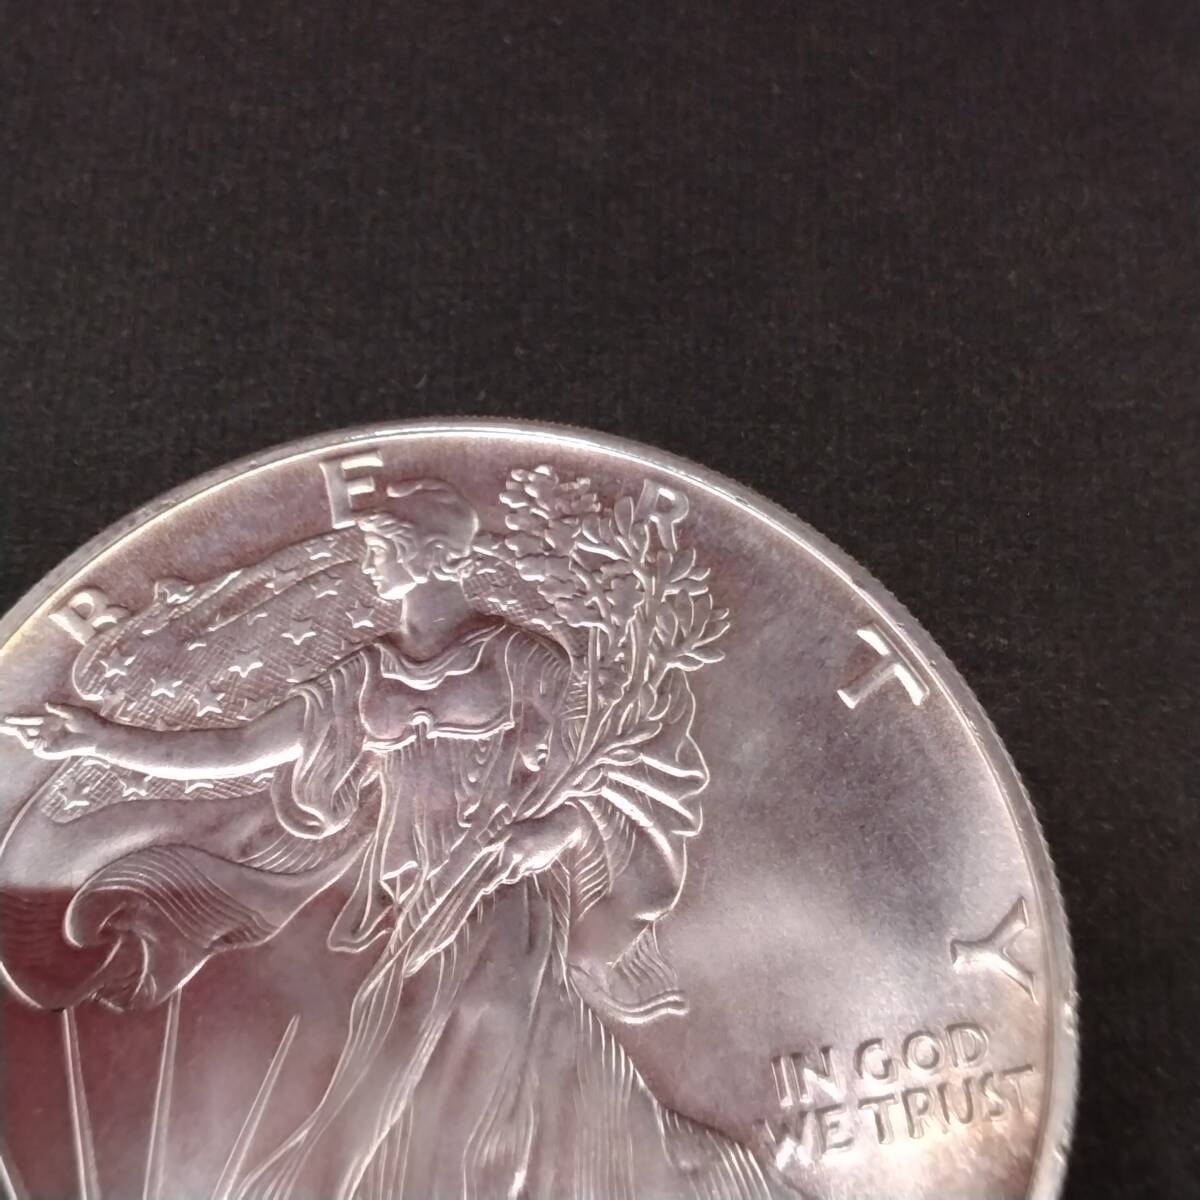  серебряный AMERICAN EAGLE LIBERTY ходьба Liberty Eagle 1 доллар серебряная монета 1995 памятная монета 1 унция 